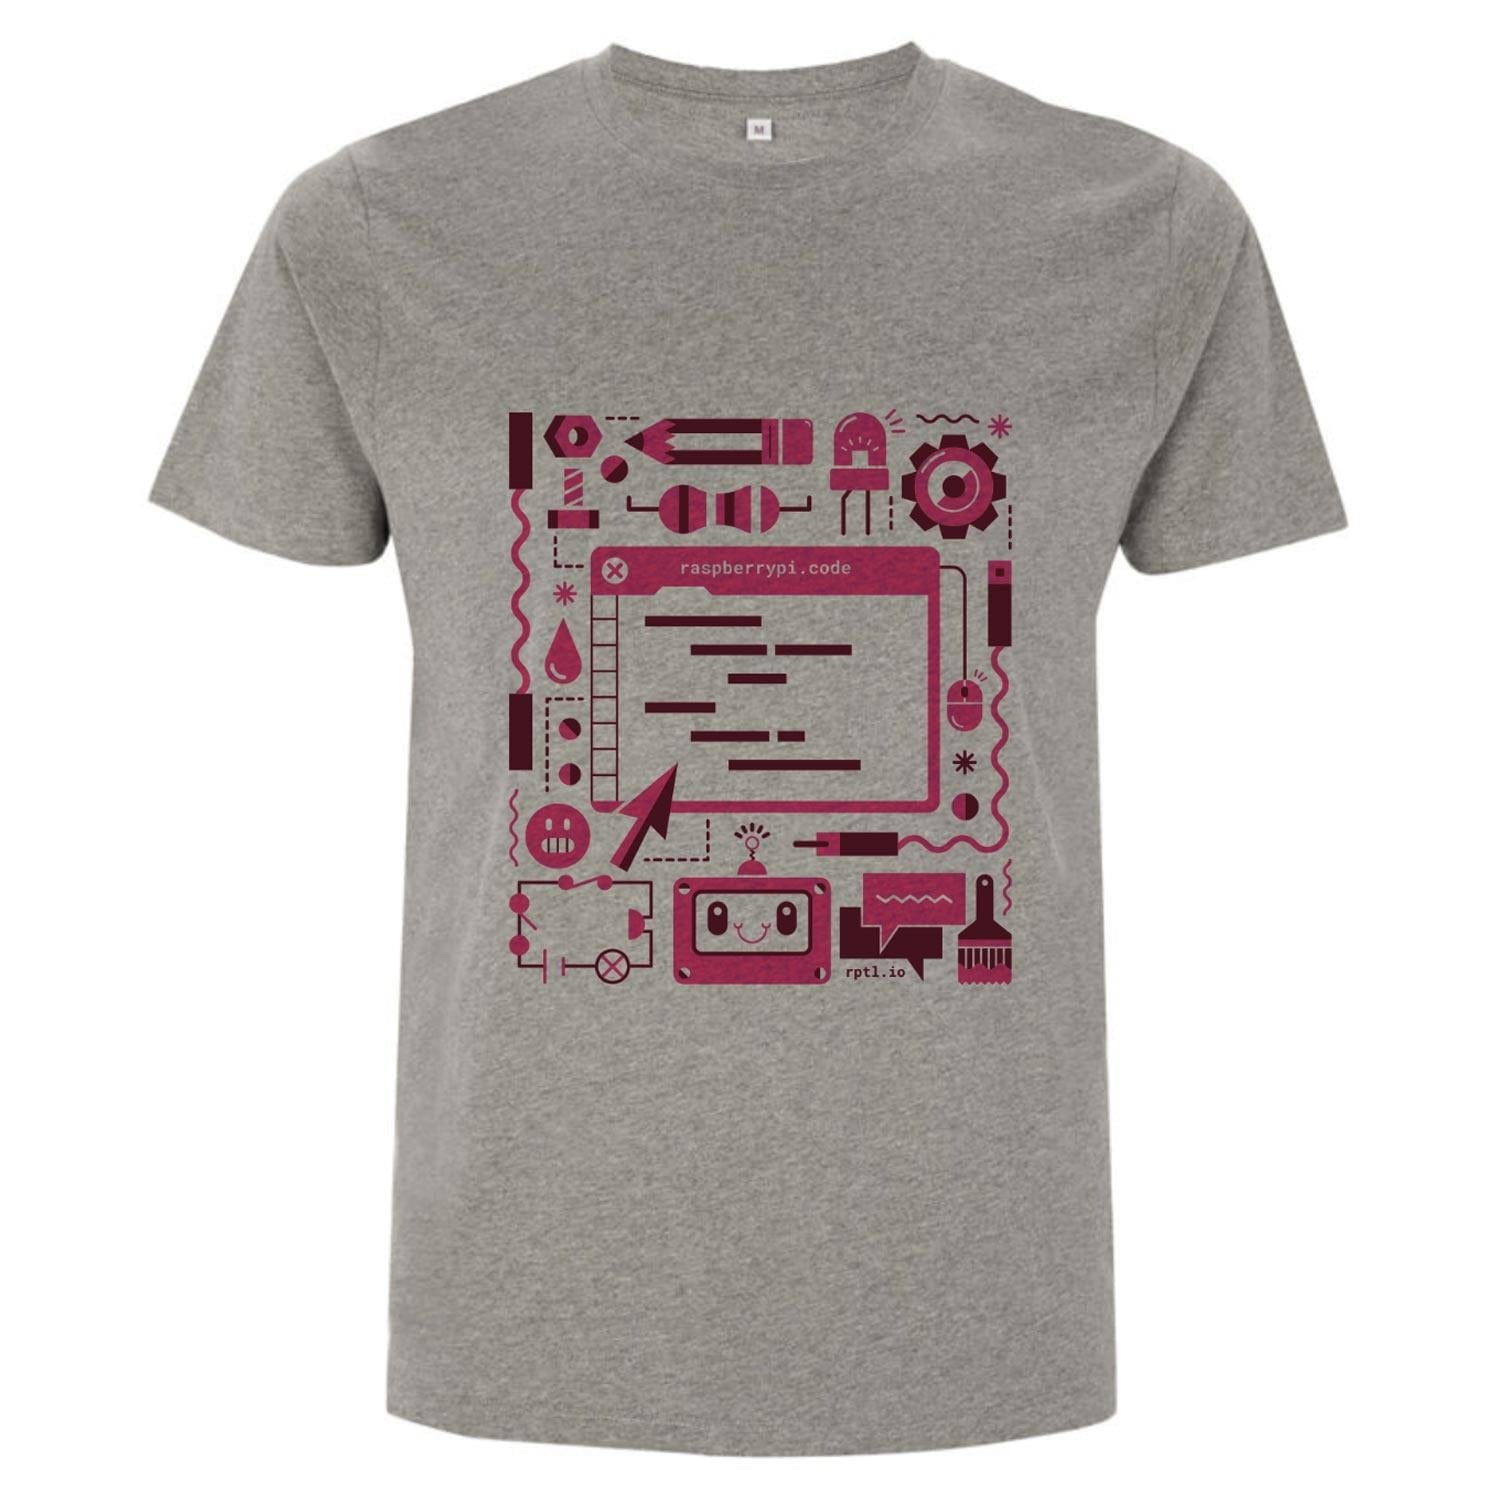 Raspberry Pi Colour Code T-shirt - The Pi Hut